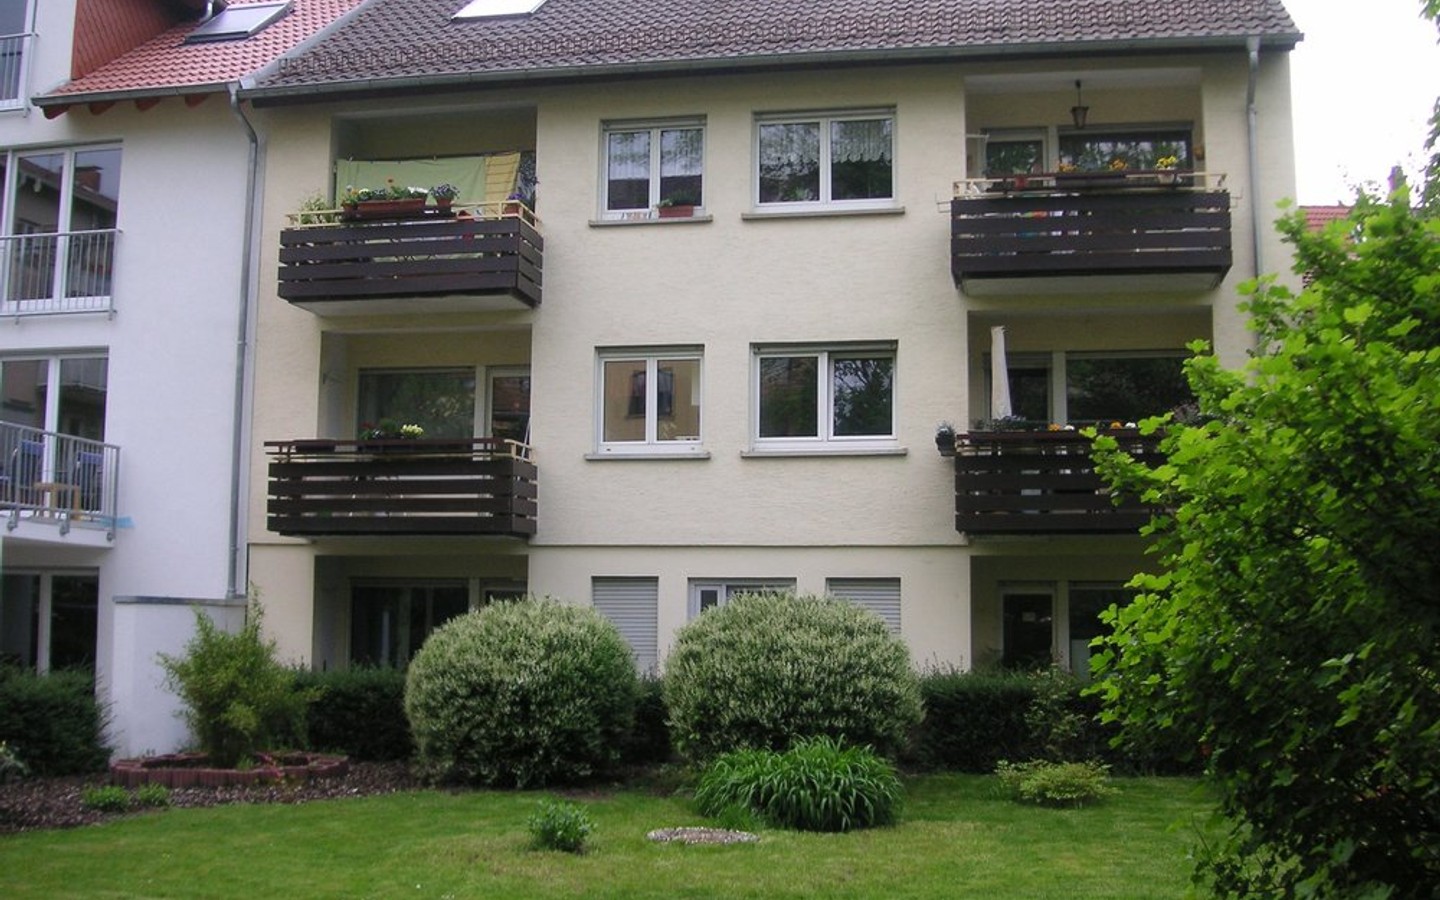 Hinterhaus Rückansicht - Top-Investment in Heidelberg-Handschuhsheim: 2 Mehrfamilienhäuser